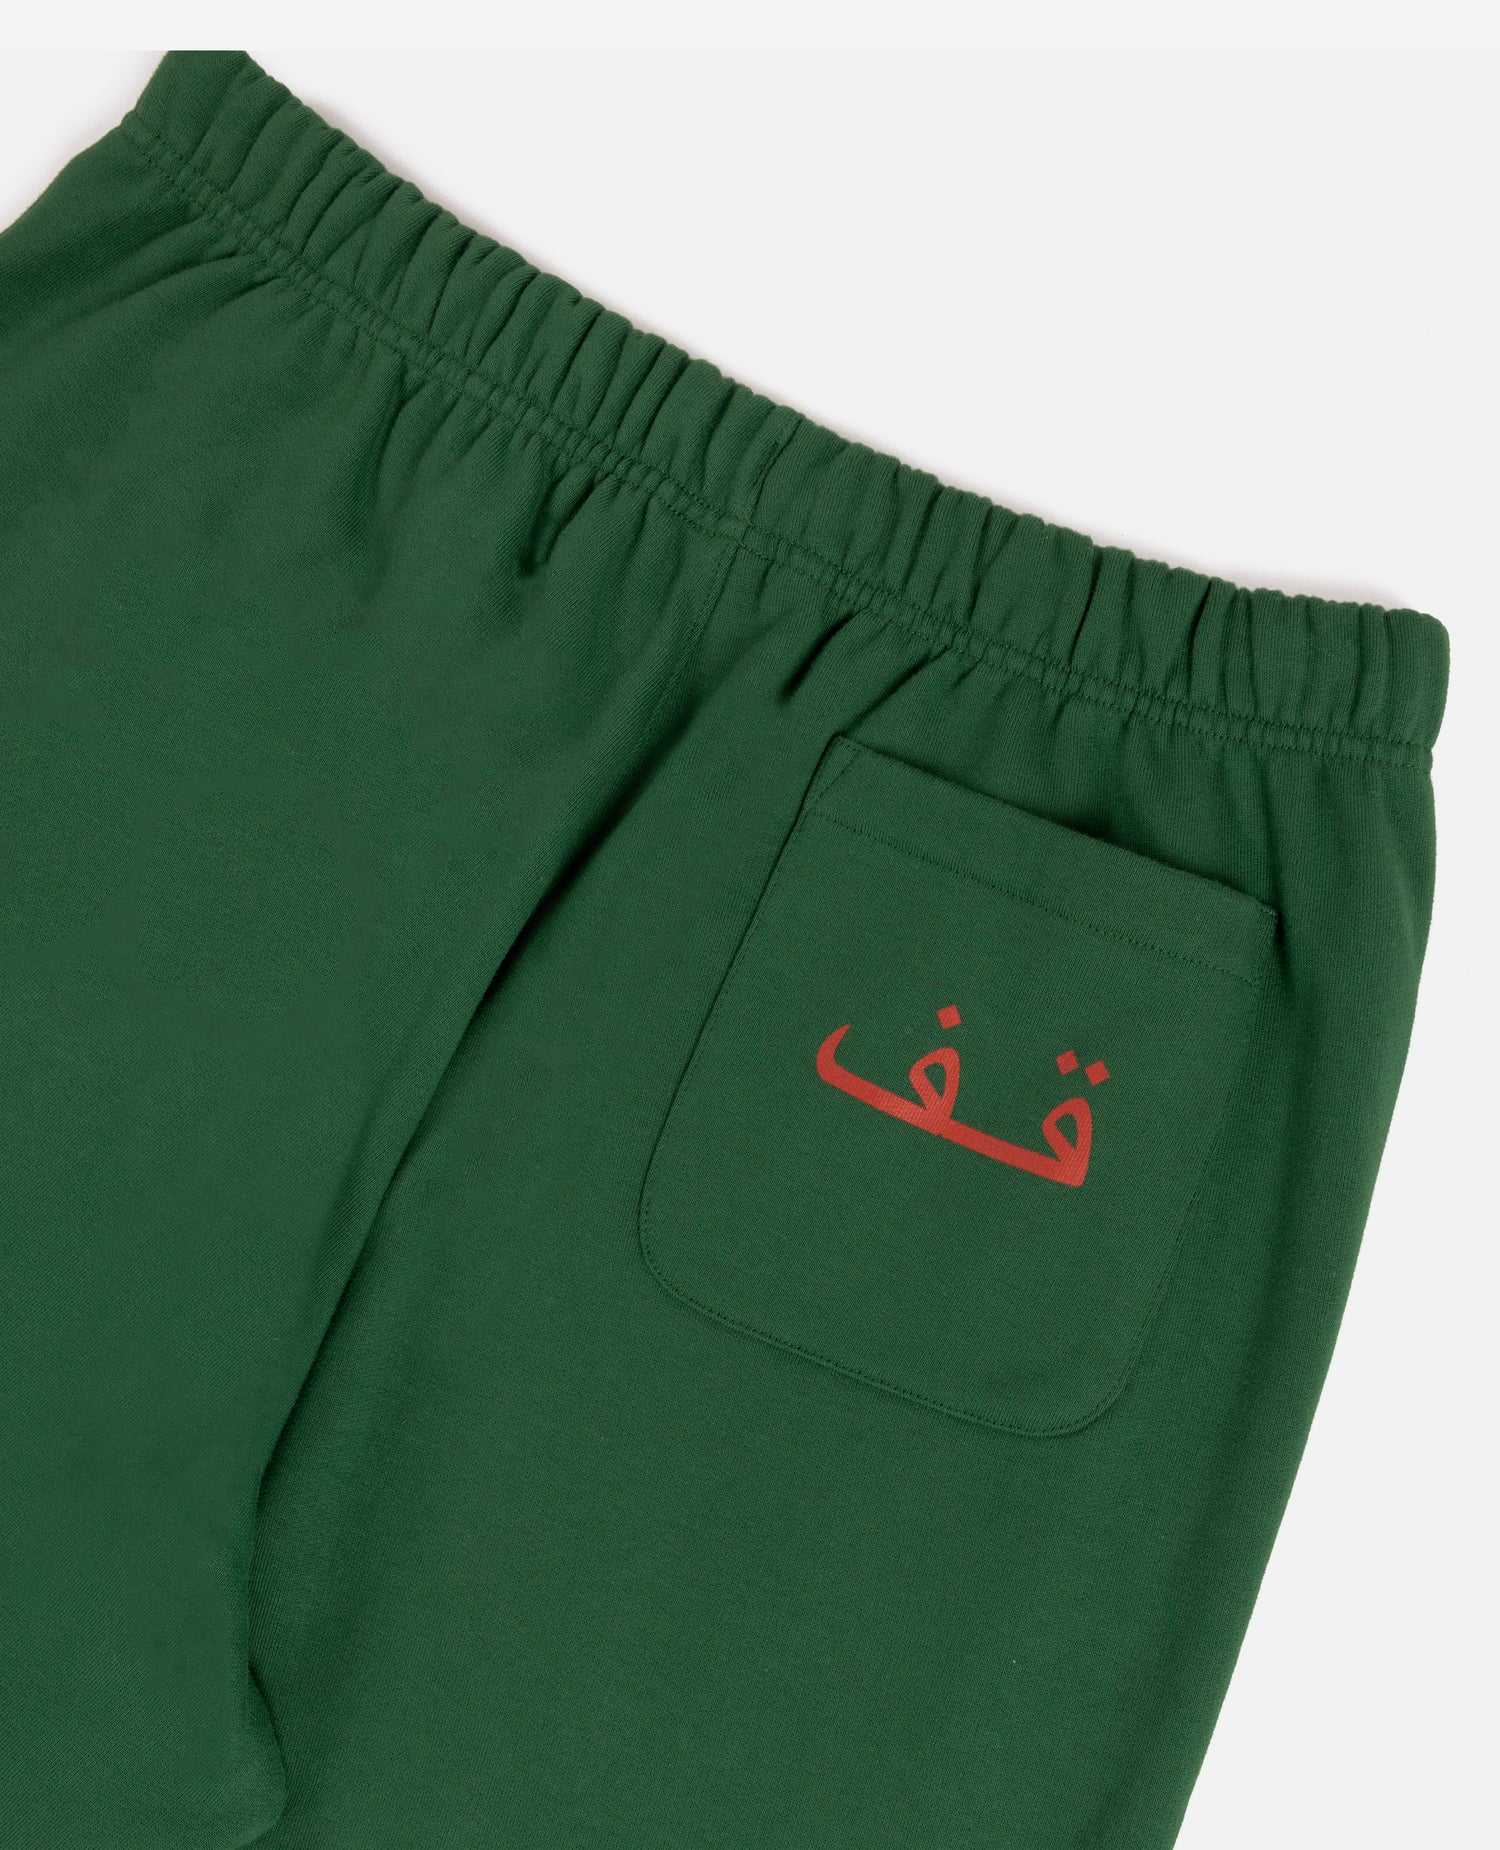 Pantalon de jogging avec logo Patta x Andy Wahloo (Hassan Hajjaj) (Eden)